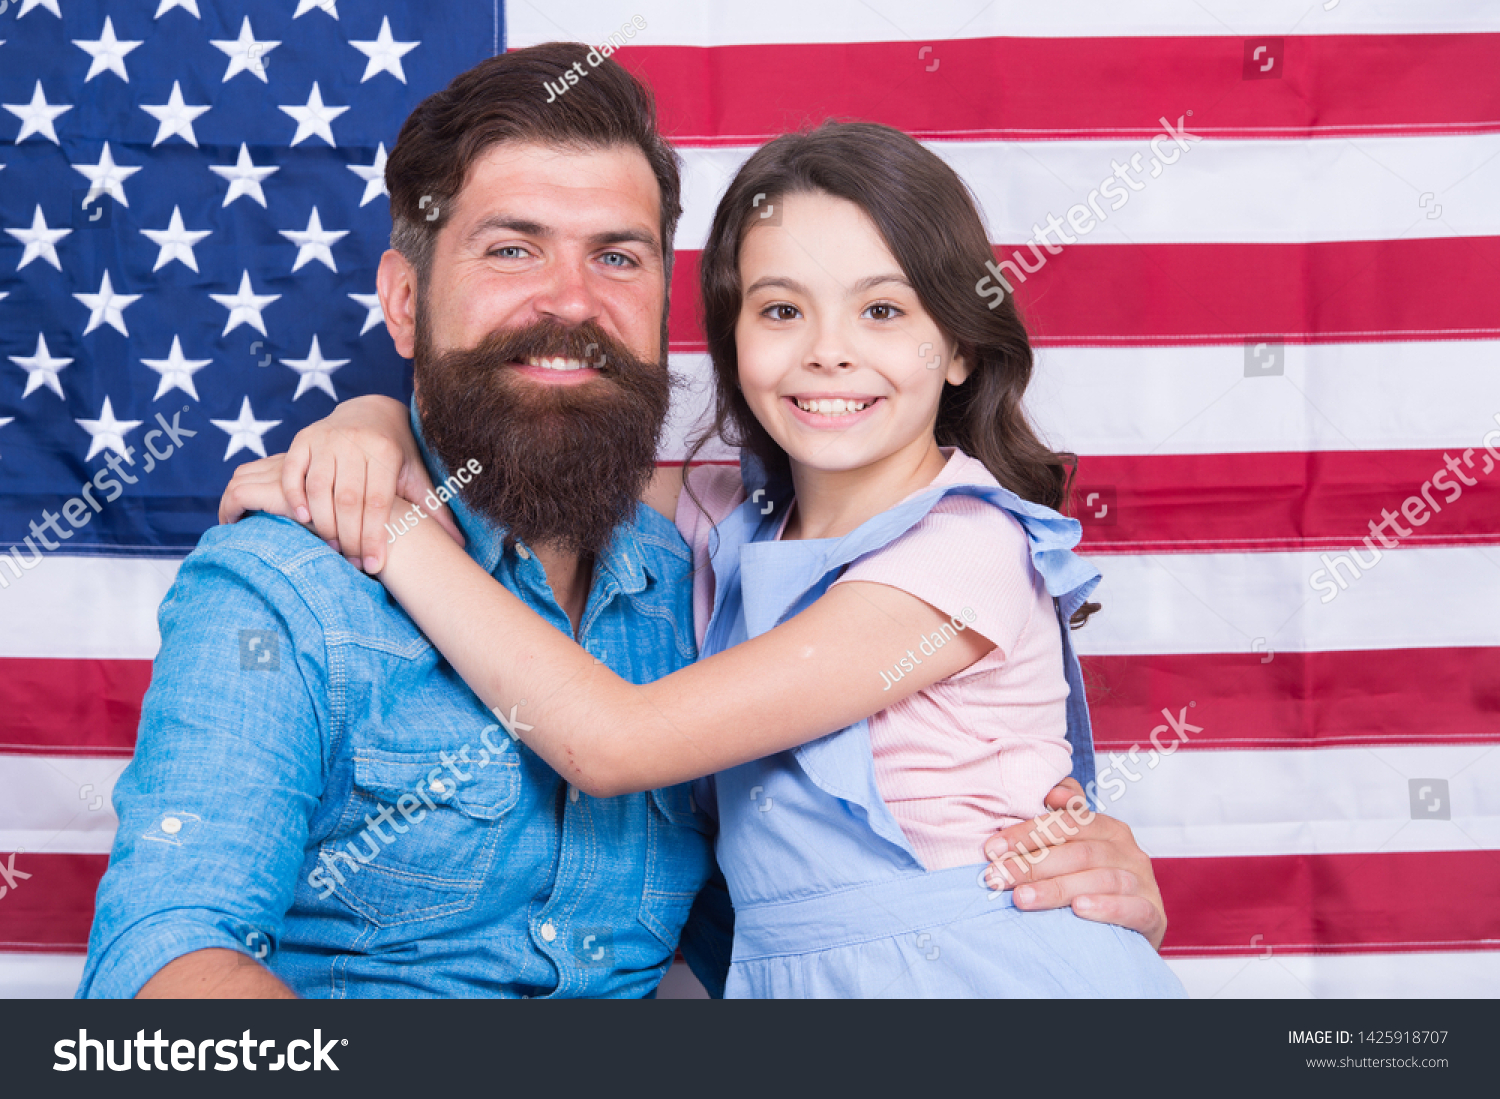 Patriotismt begins at home. Patriotic family showing patriotism on american flag decor. American patriotism. Patriotism and love for the homeland. Independence day. #1425918707